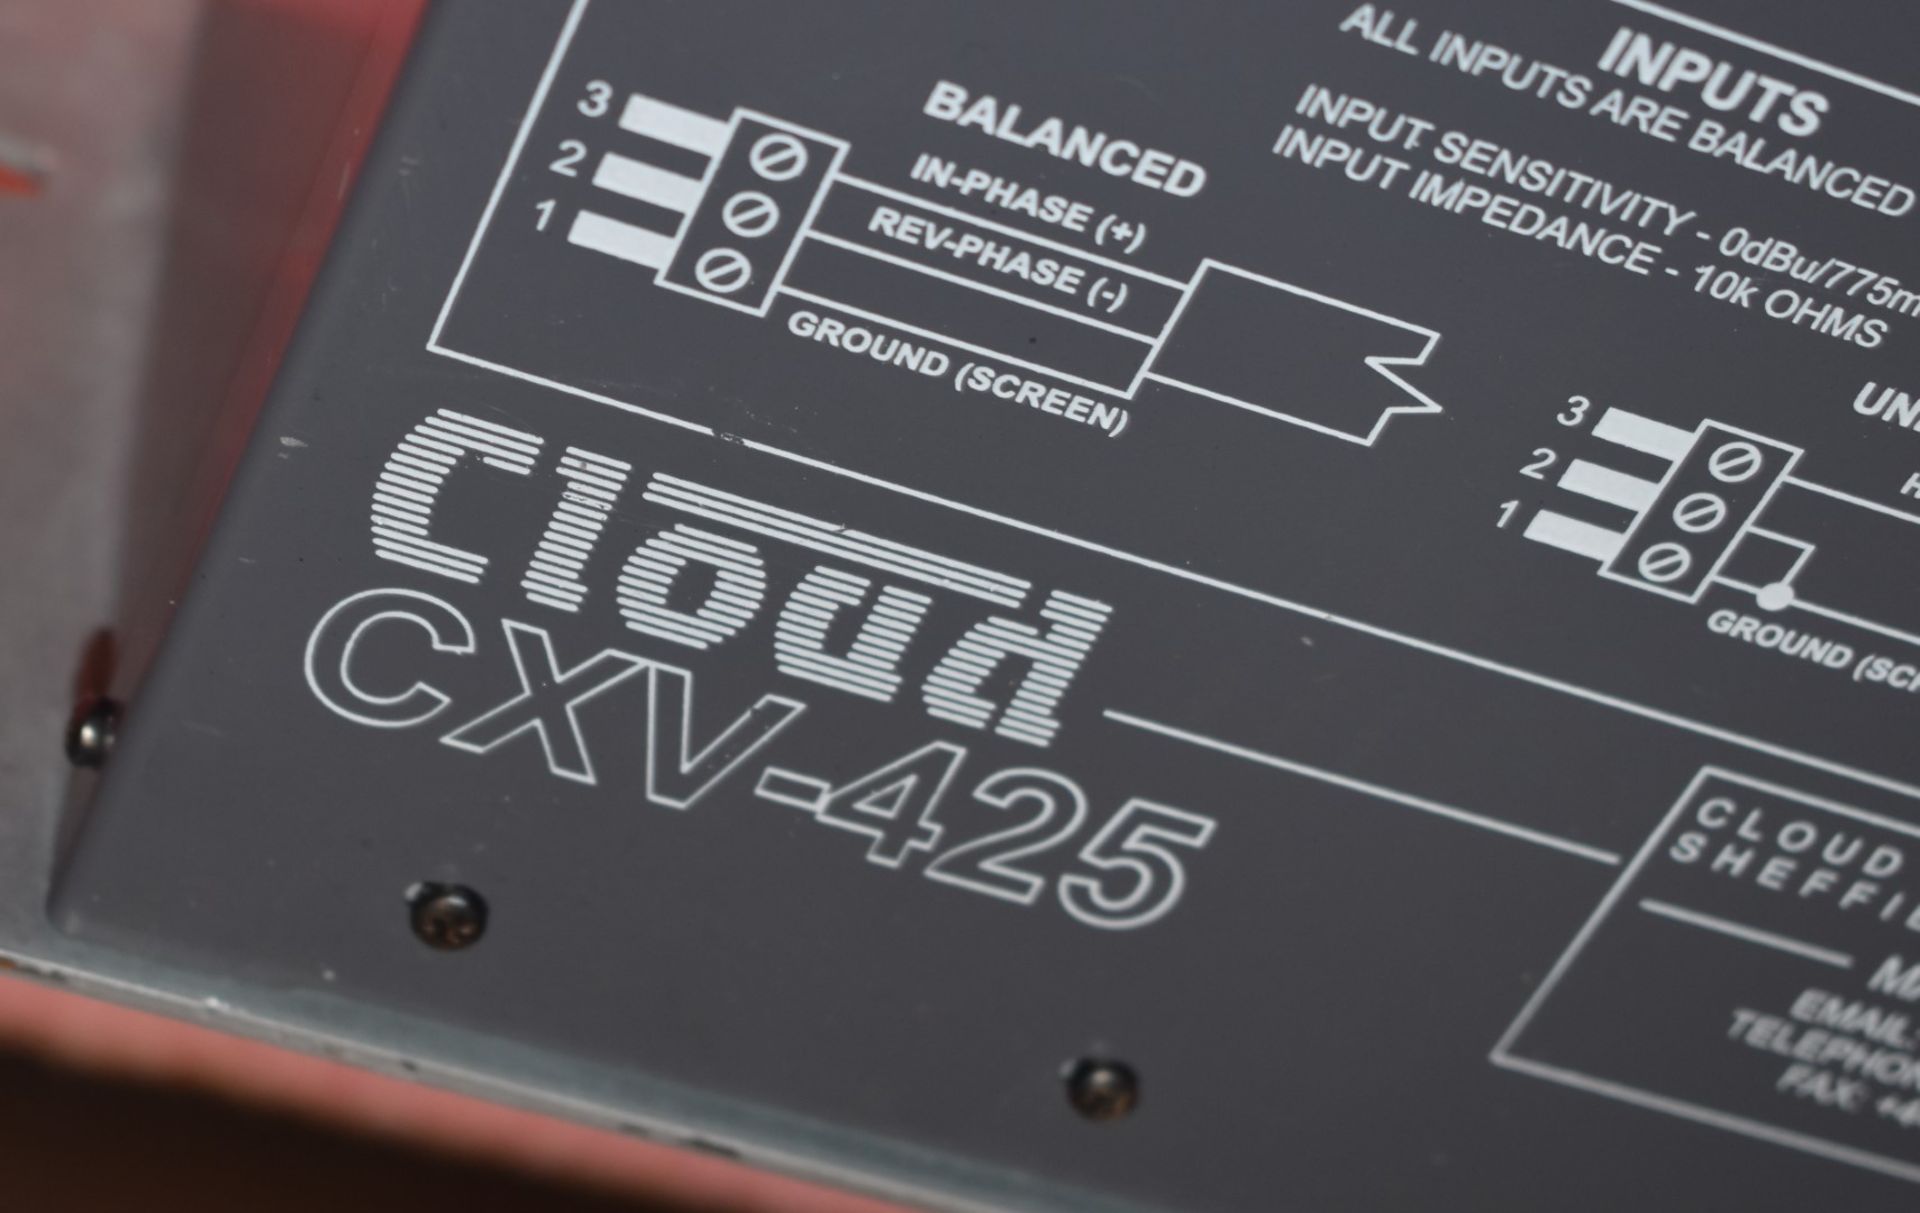 1 x Cloud CXV-425  Power Amplifier - 100v, 4x 250w, Transformer Less - Rackmount Unit 3U - CL409 - - Image 2 of 6